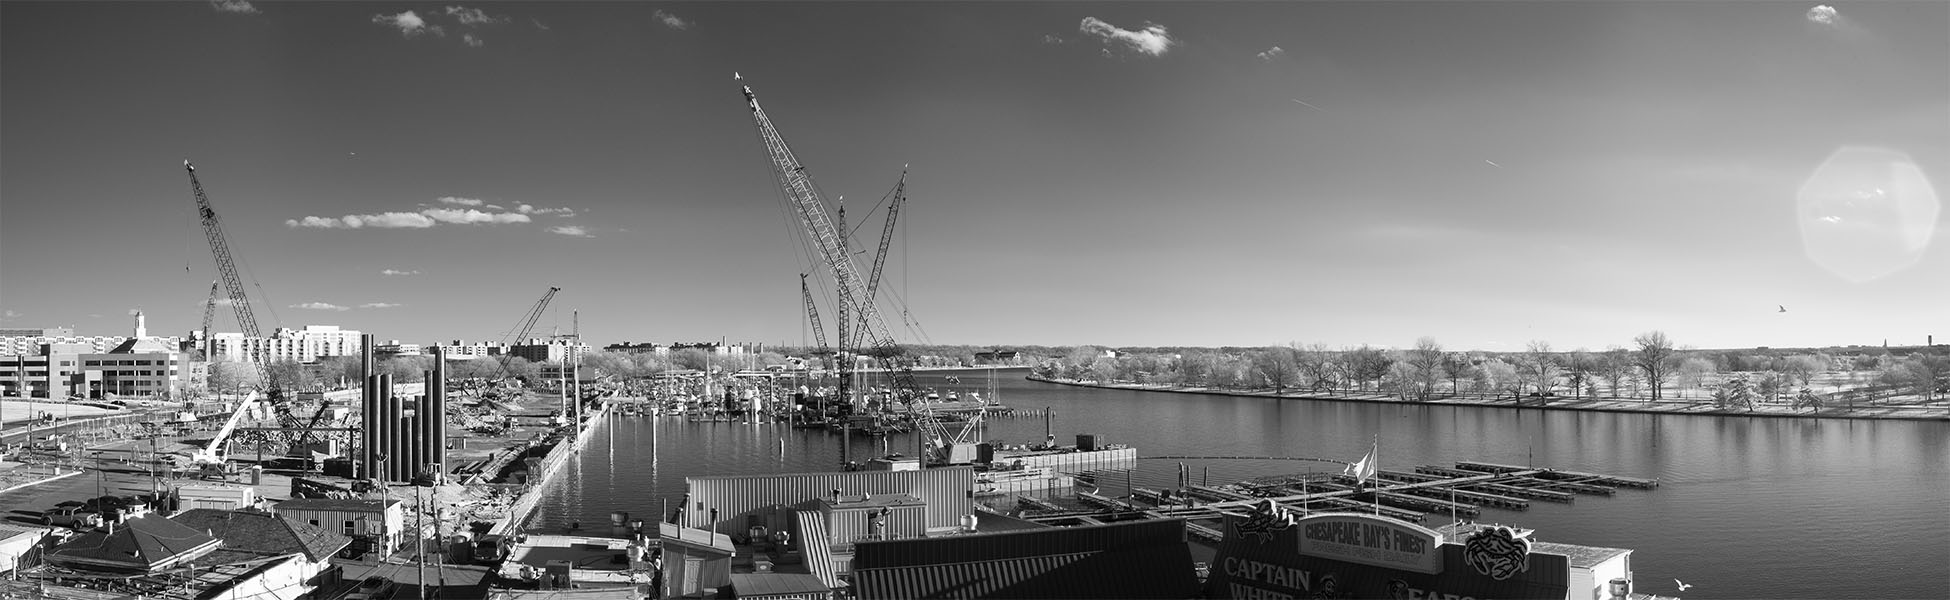 Panorama of the Construction of the Wharf, Washington DC